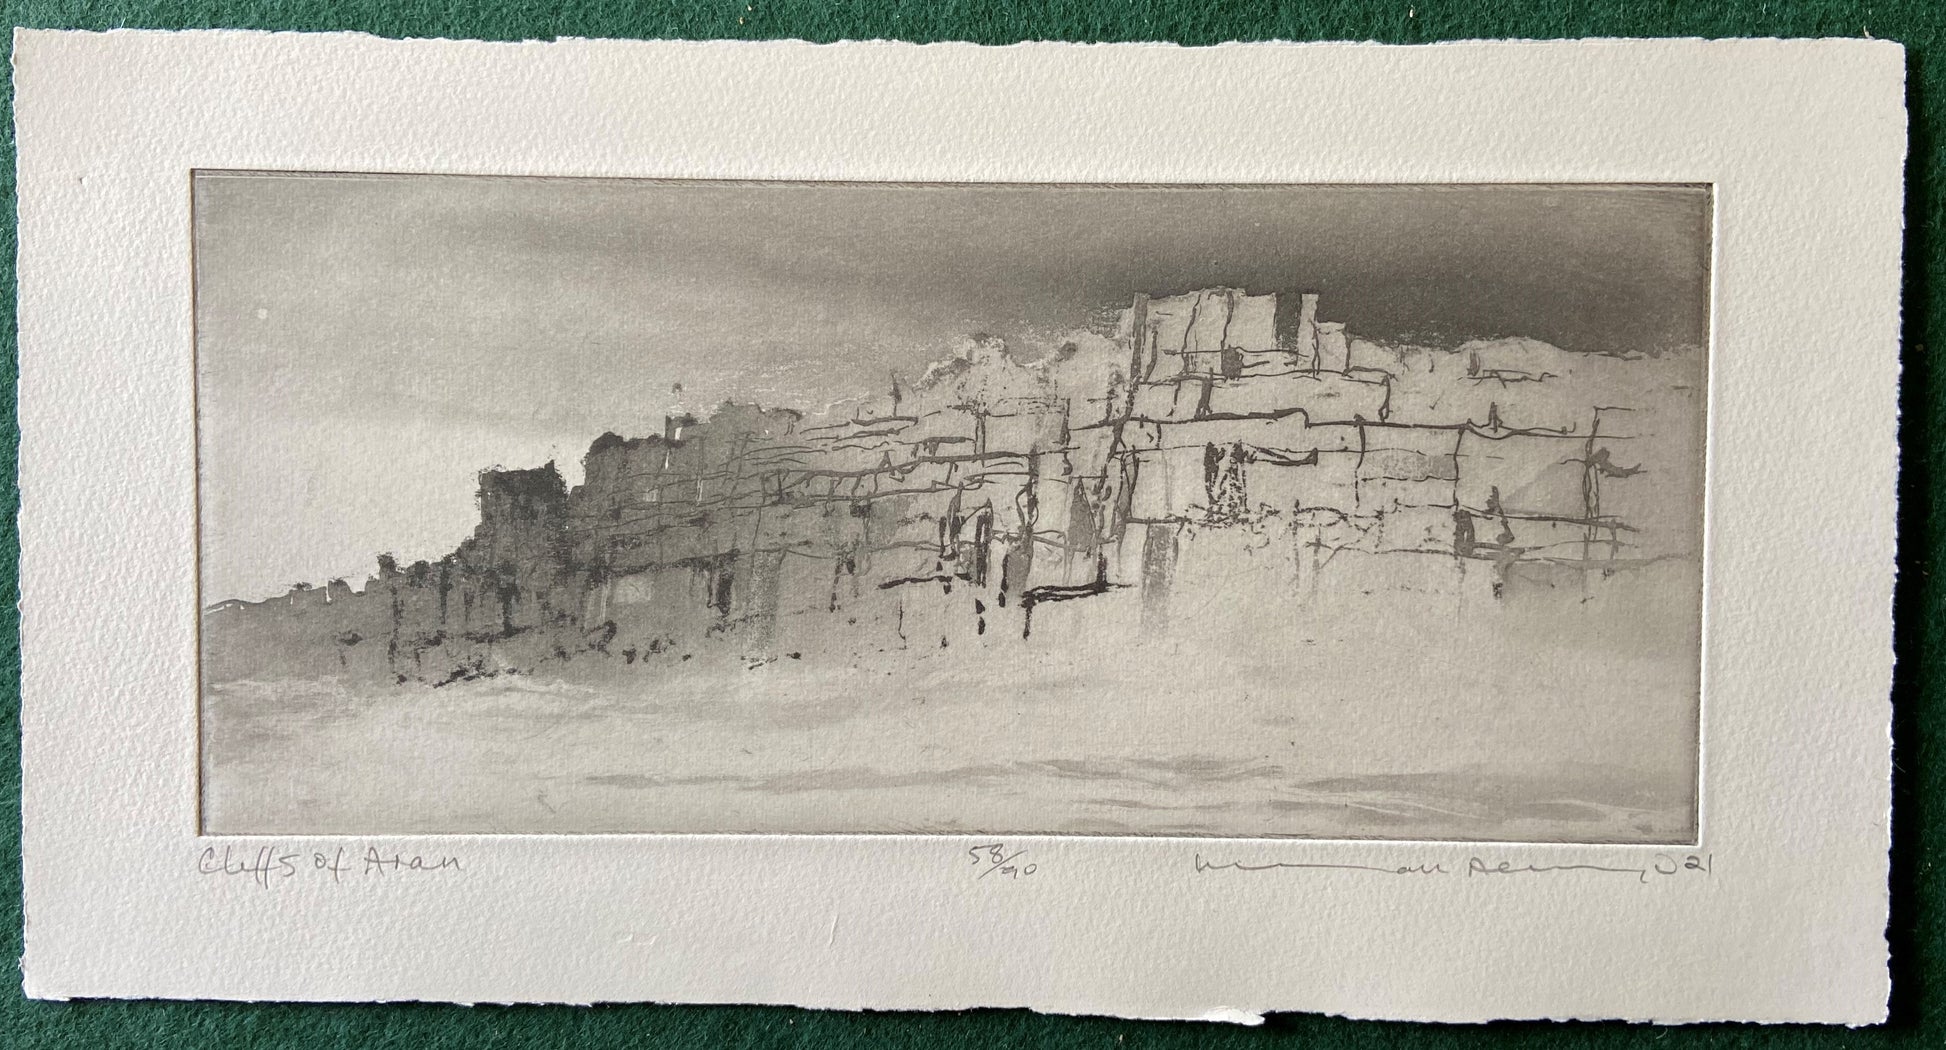 Cliffs of Aran